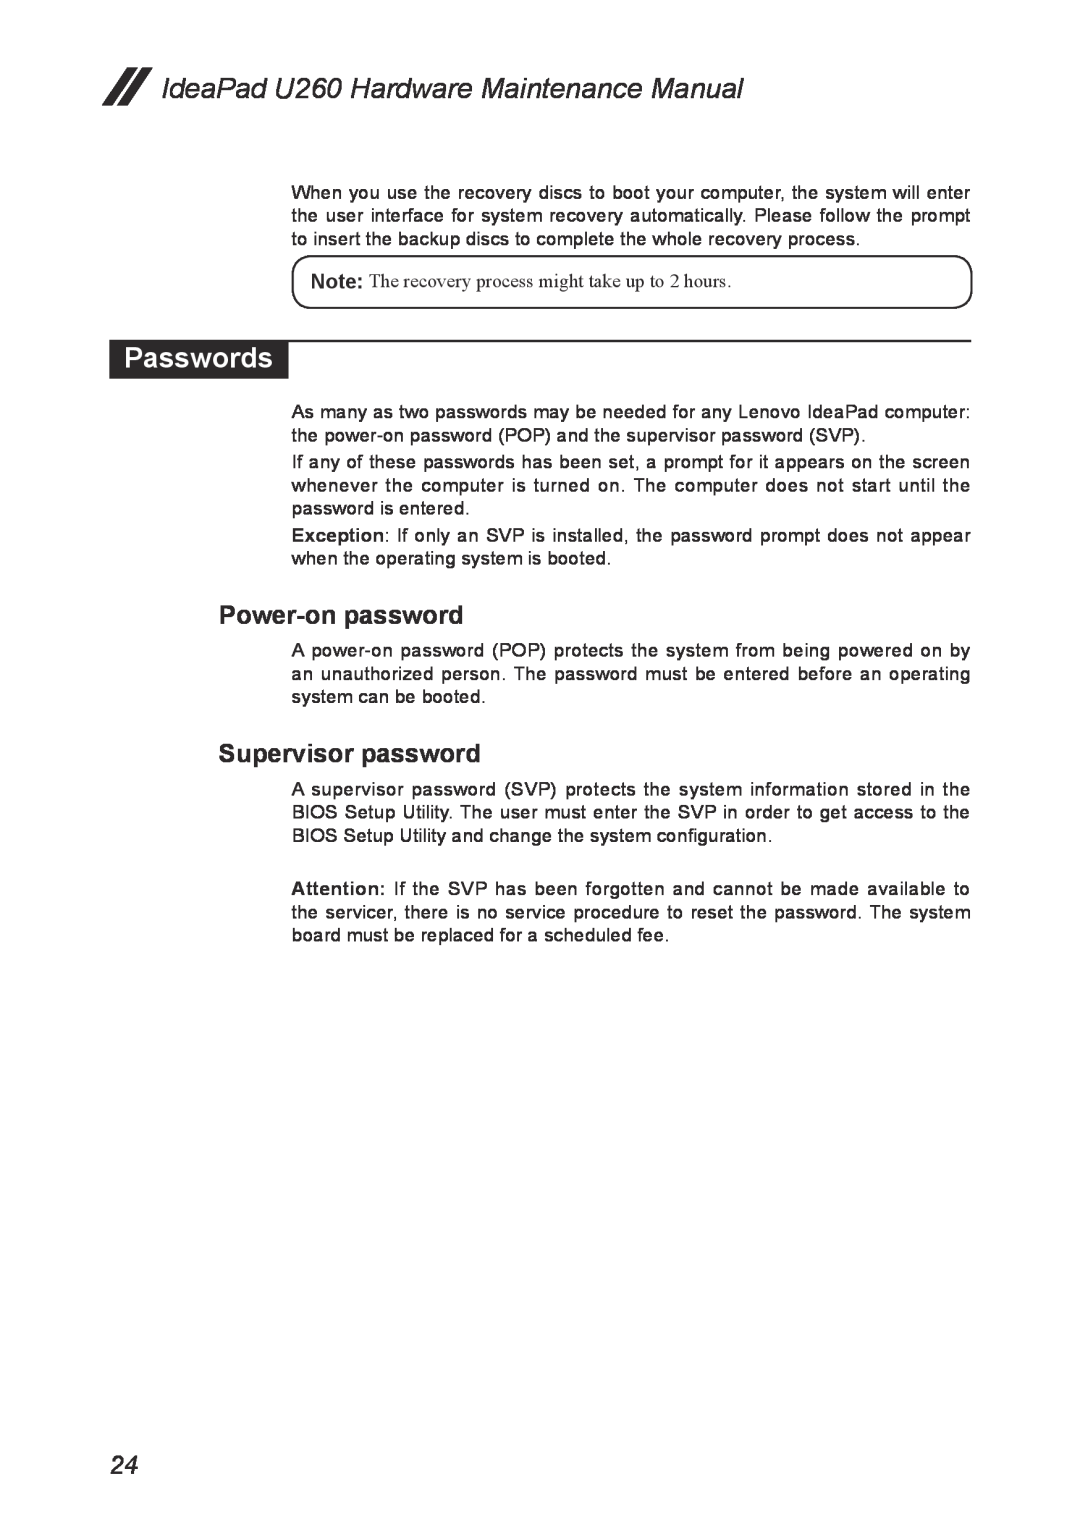 Lenovo manual Passwords, Power-on password, Supervisor password, IdeaPad U260 Hardware Maintenance Manual 